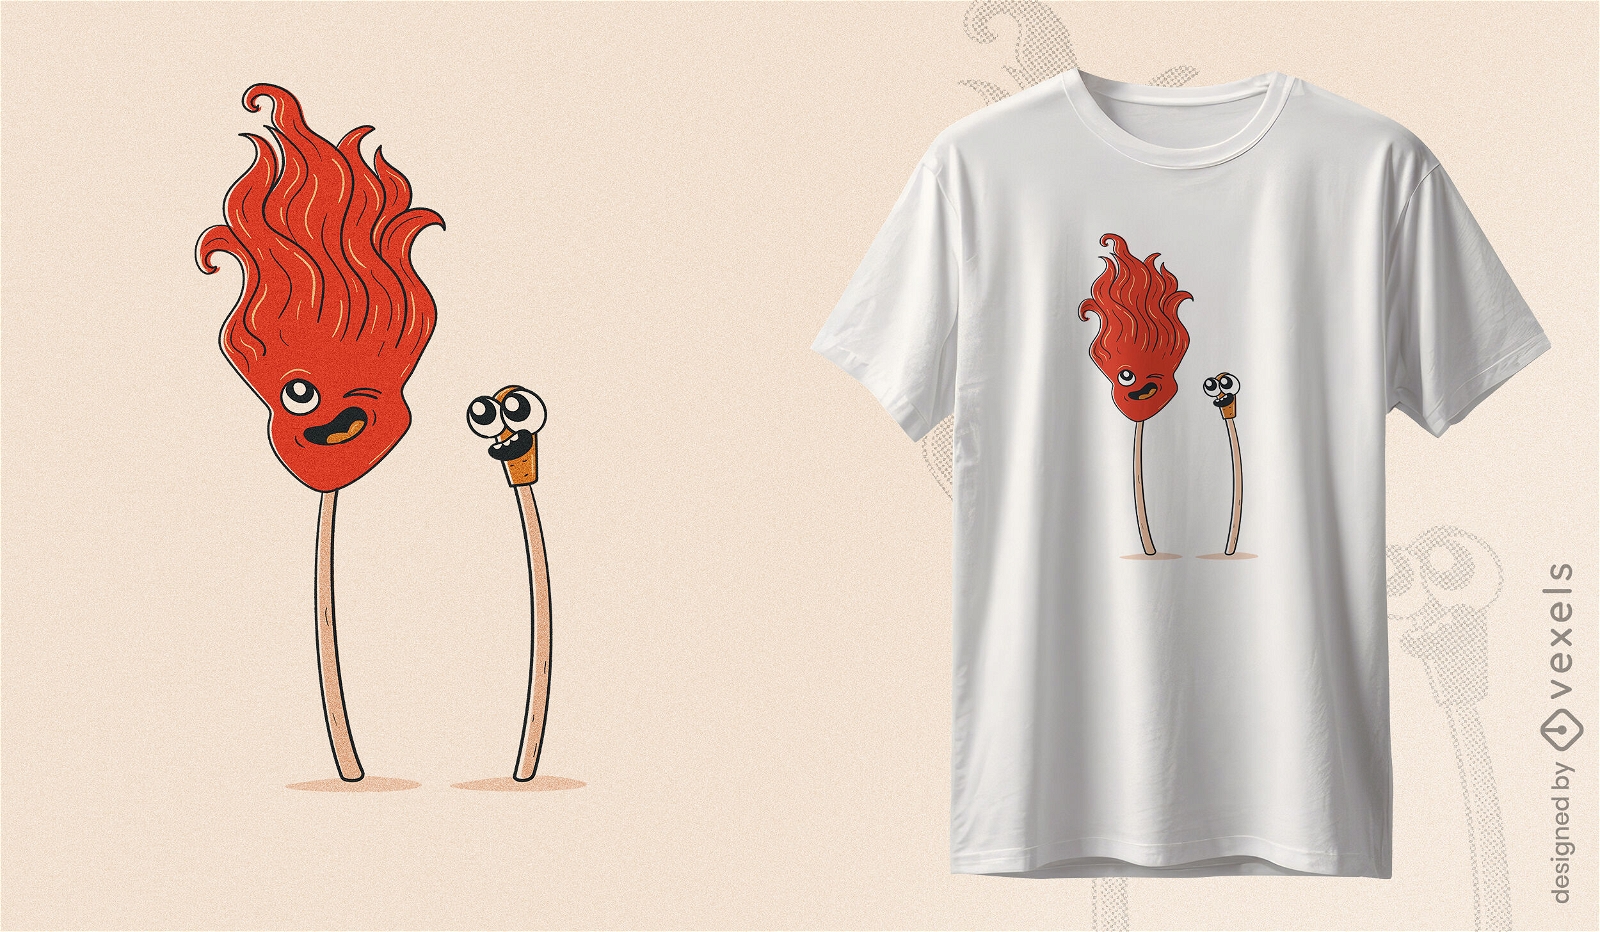 Matchstick-Persönlichkeits-T-Shirt-Design